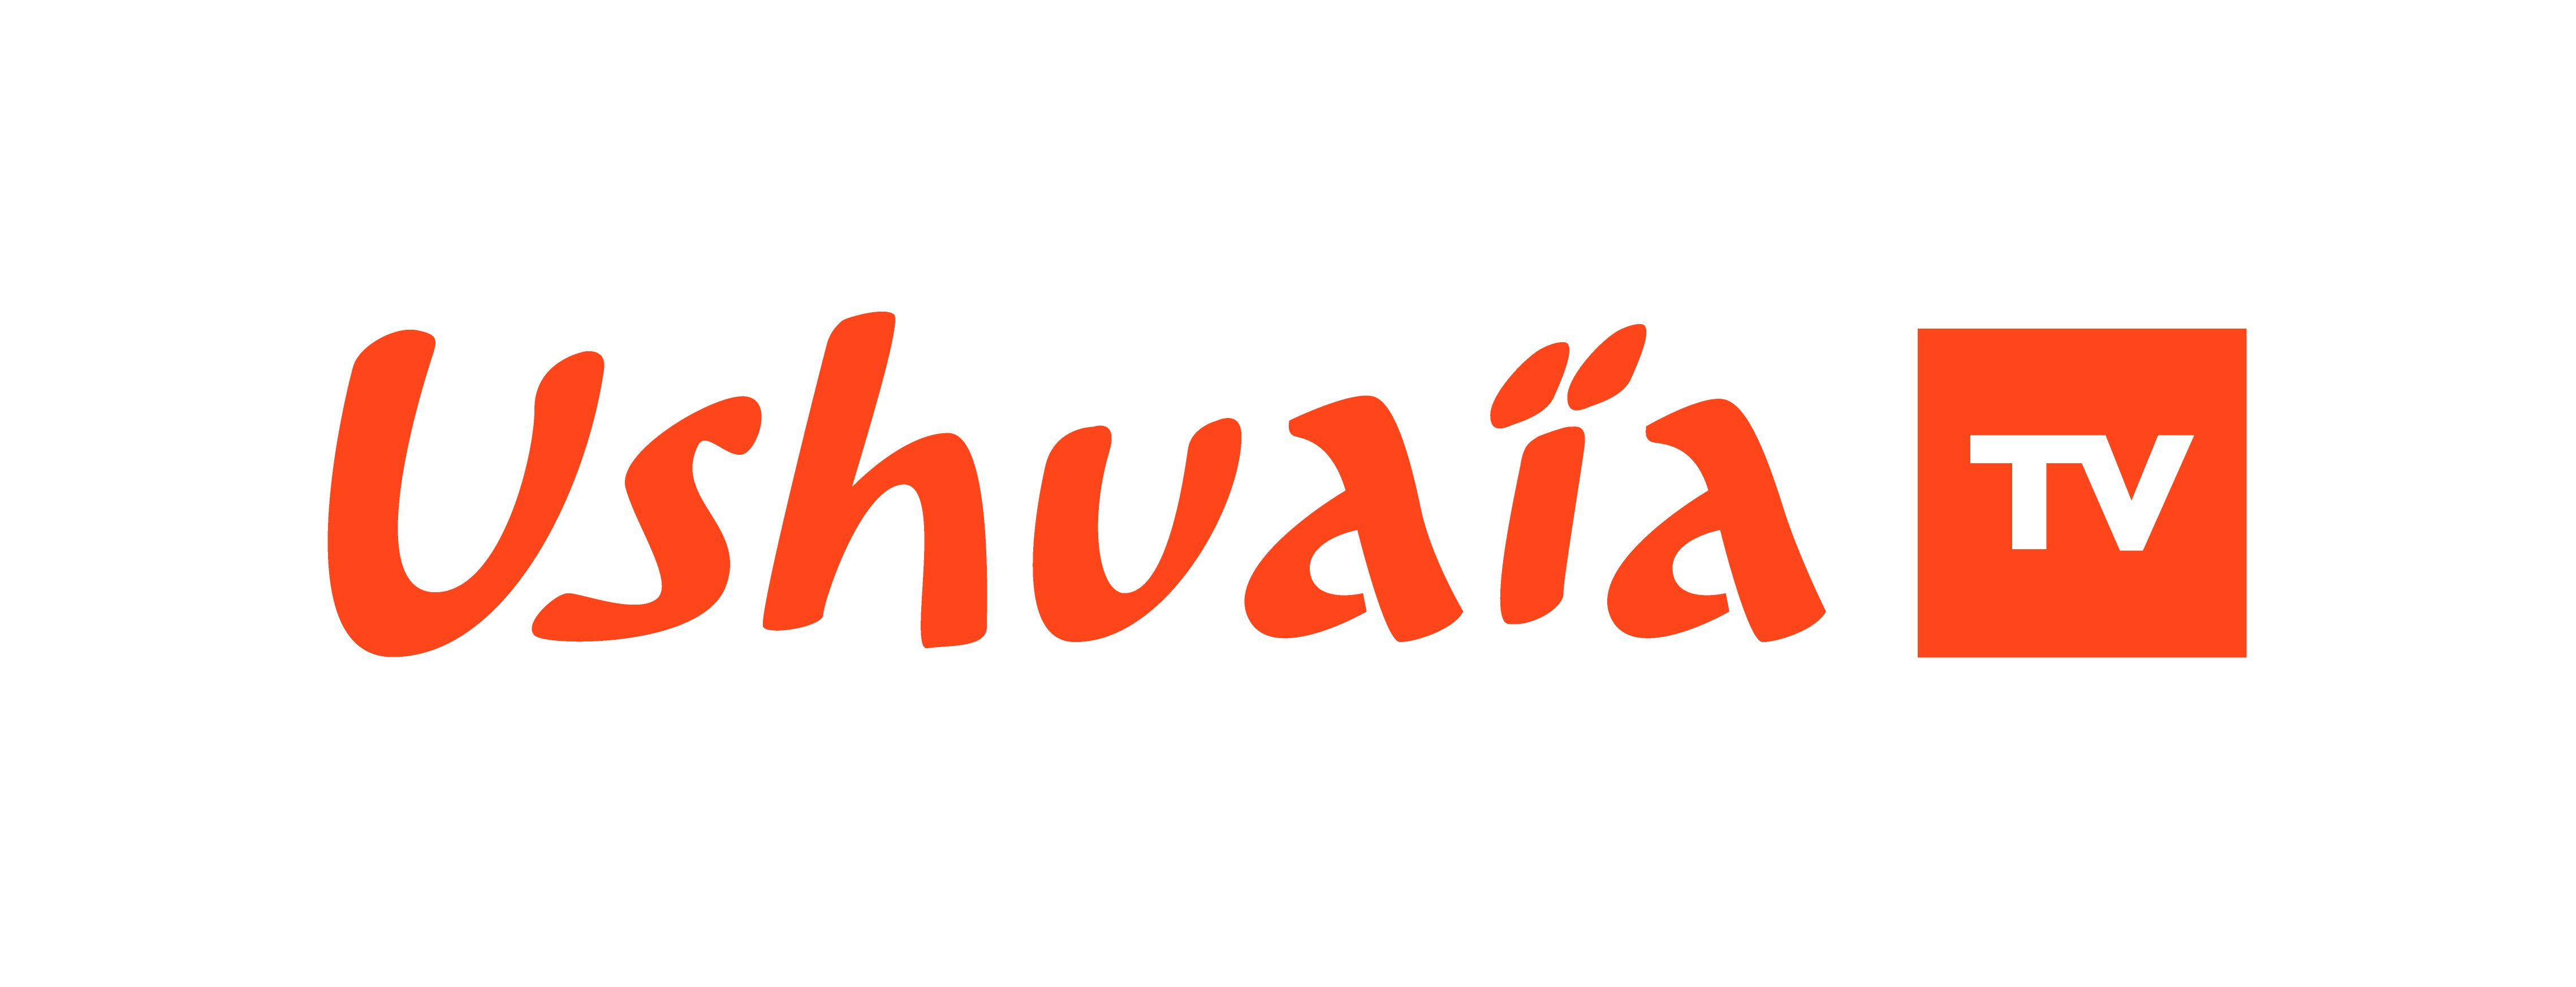 logo Ushuaia tv logo V2 RVB